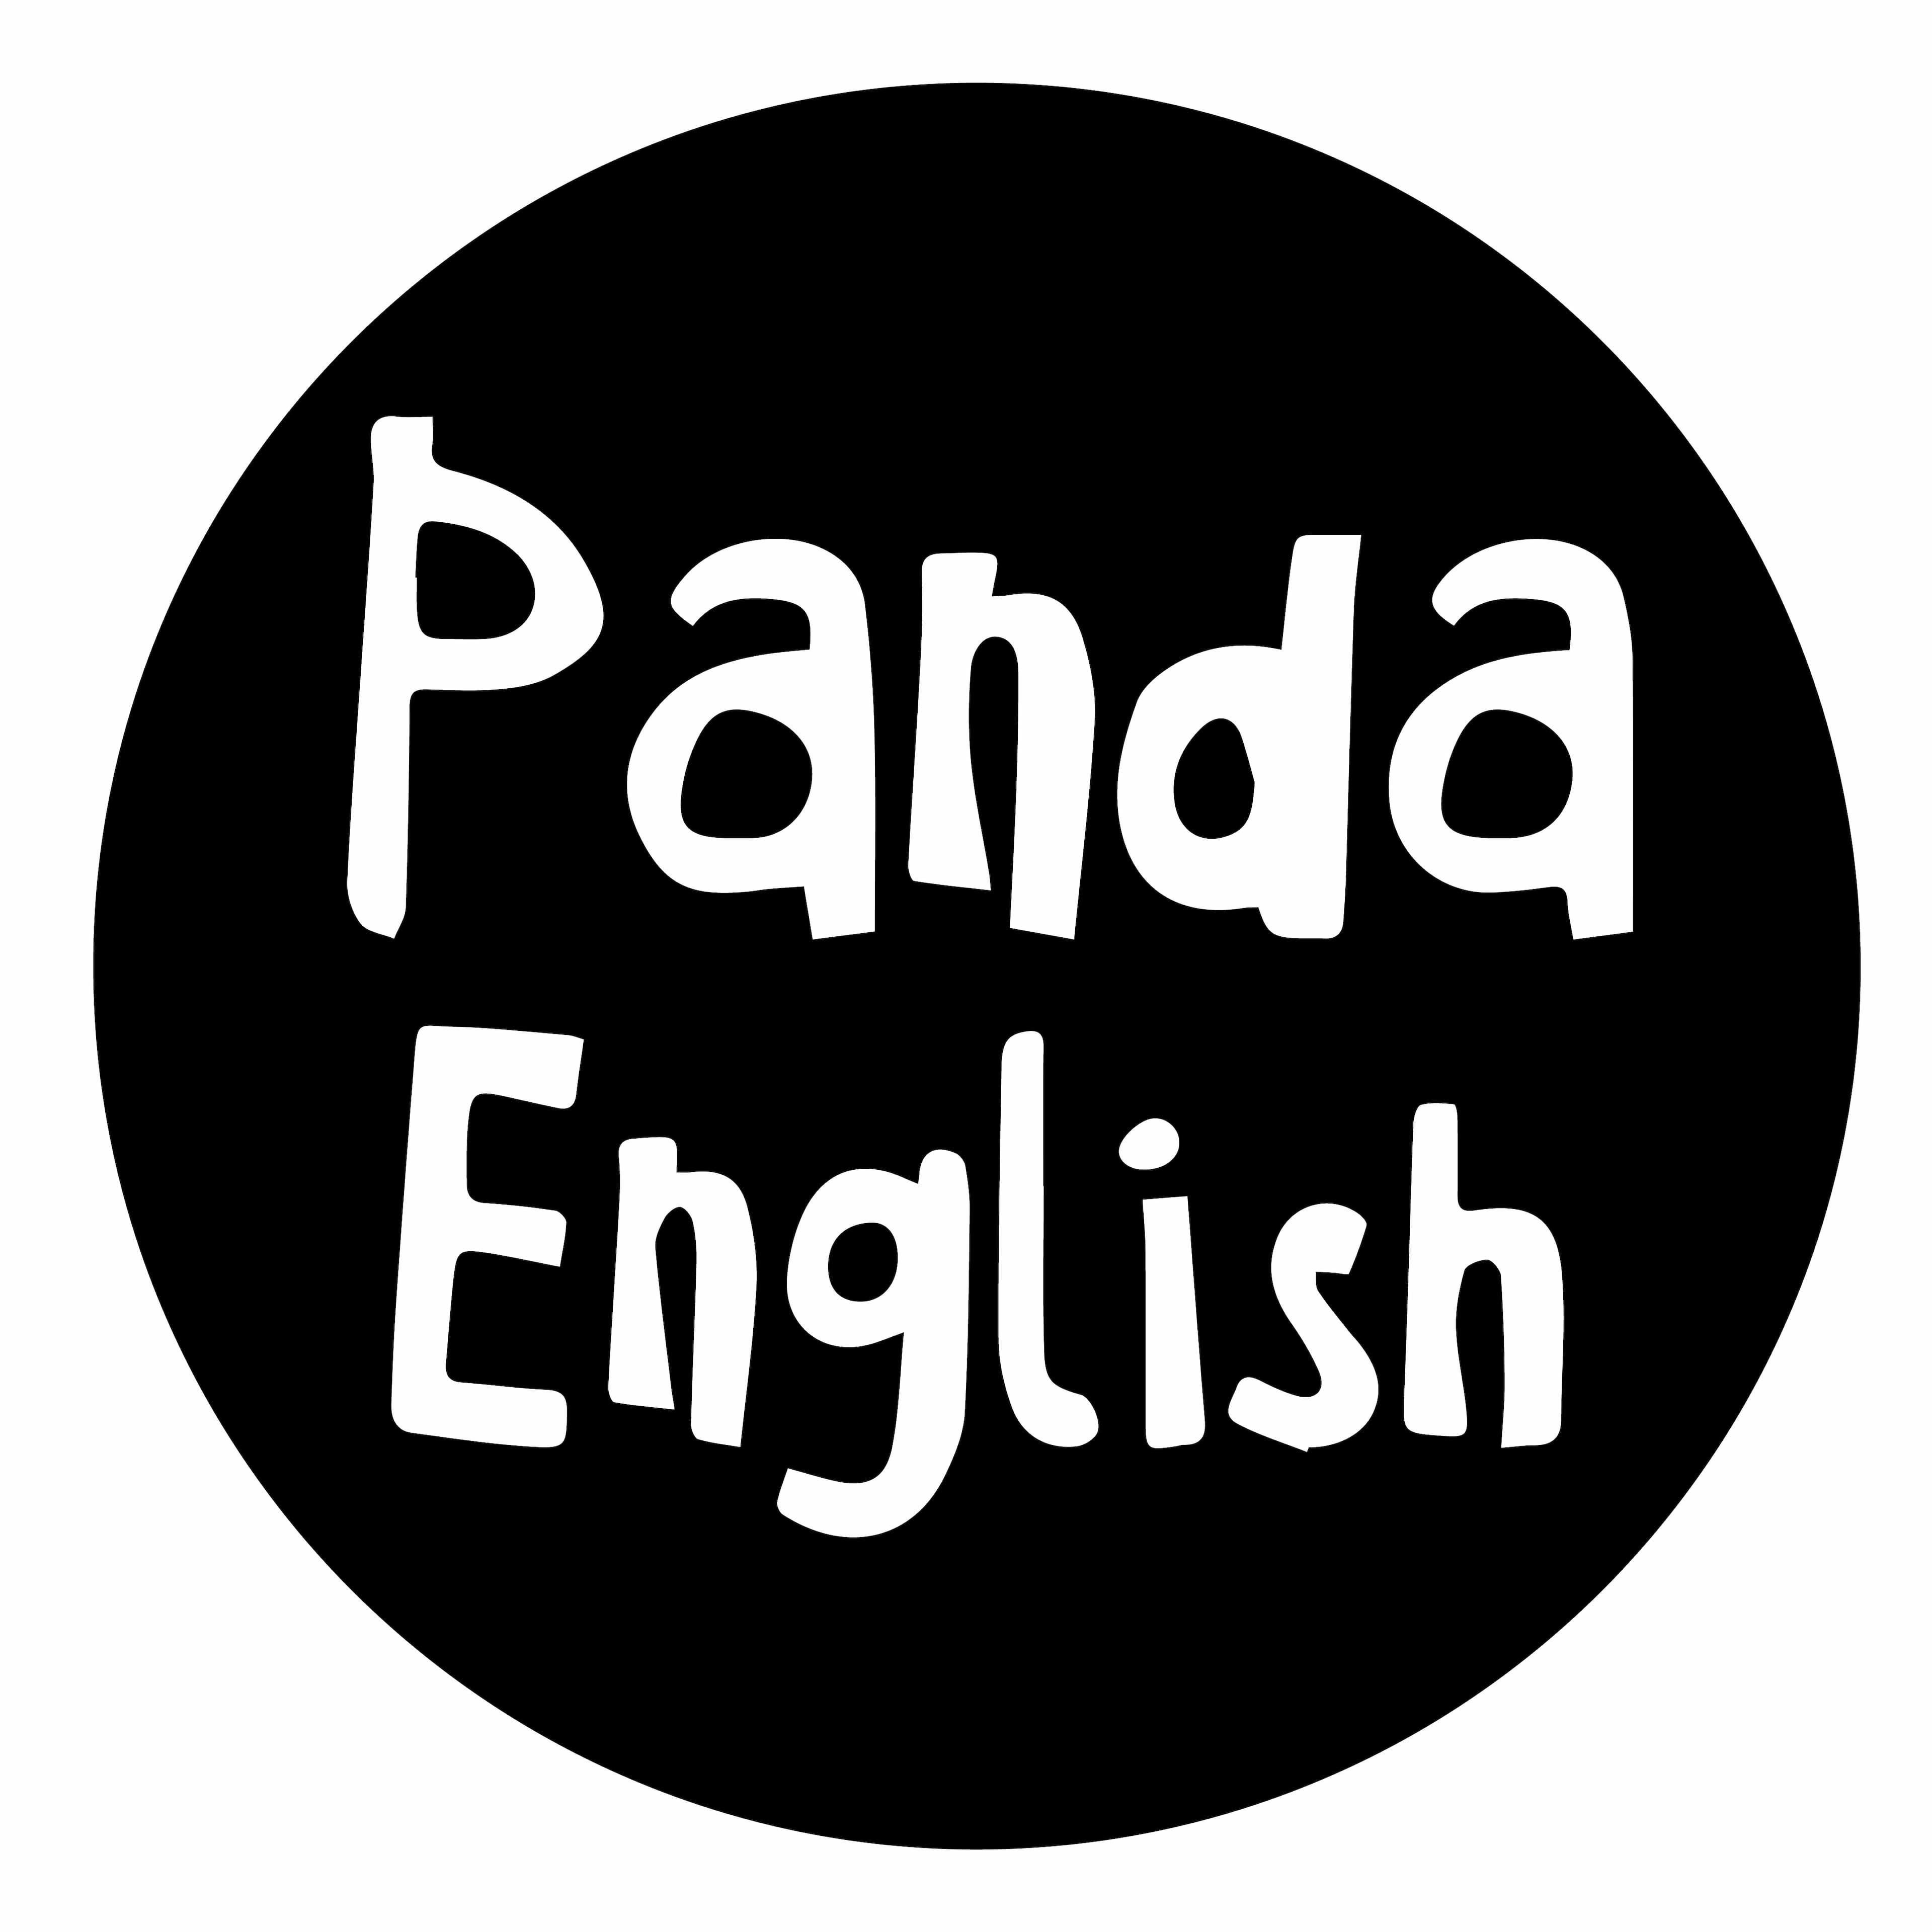 Panda English